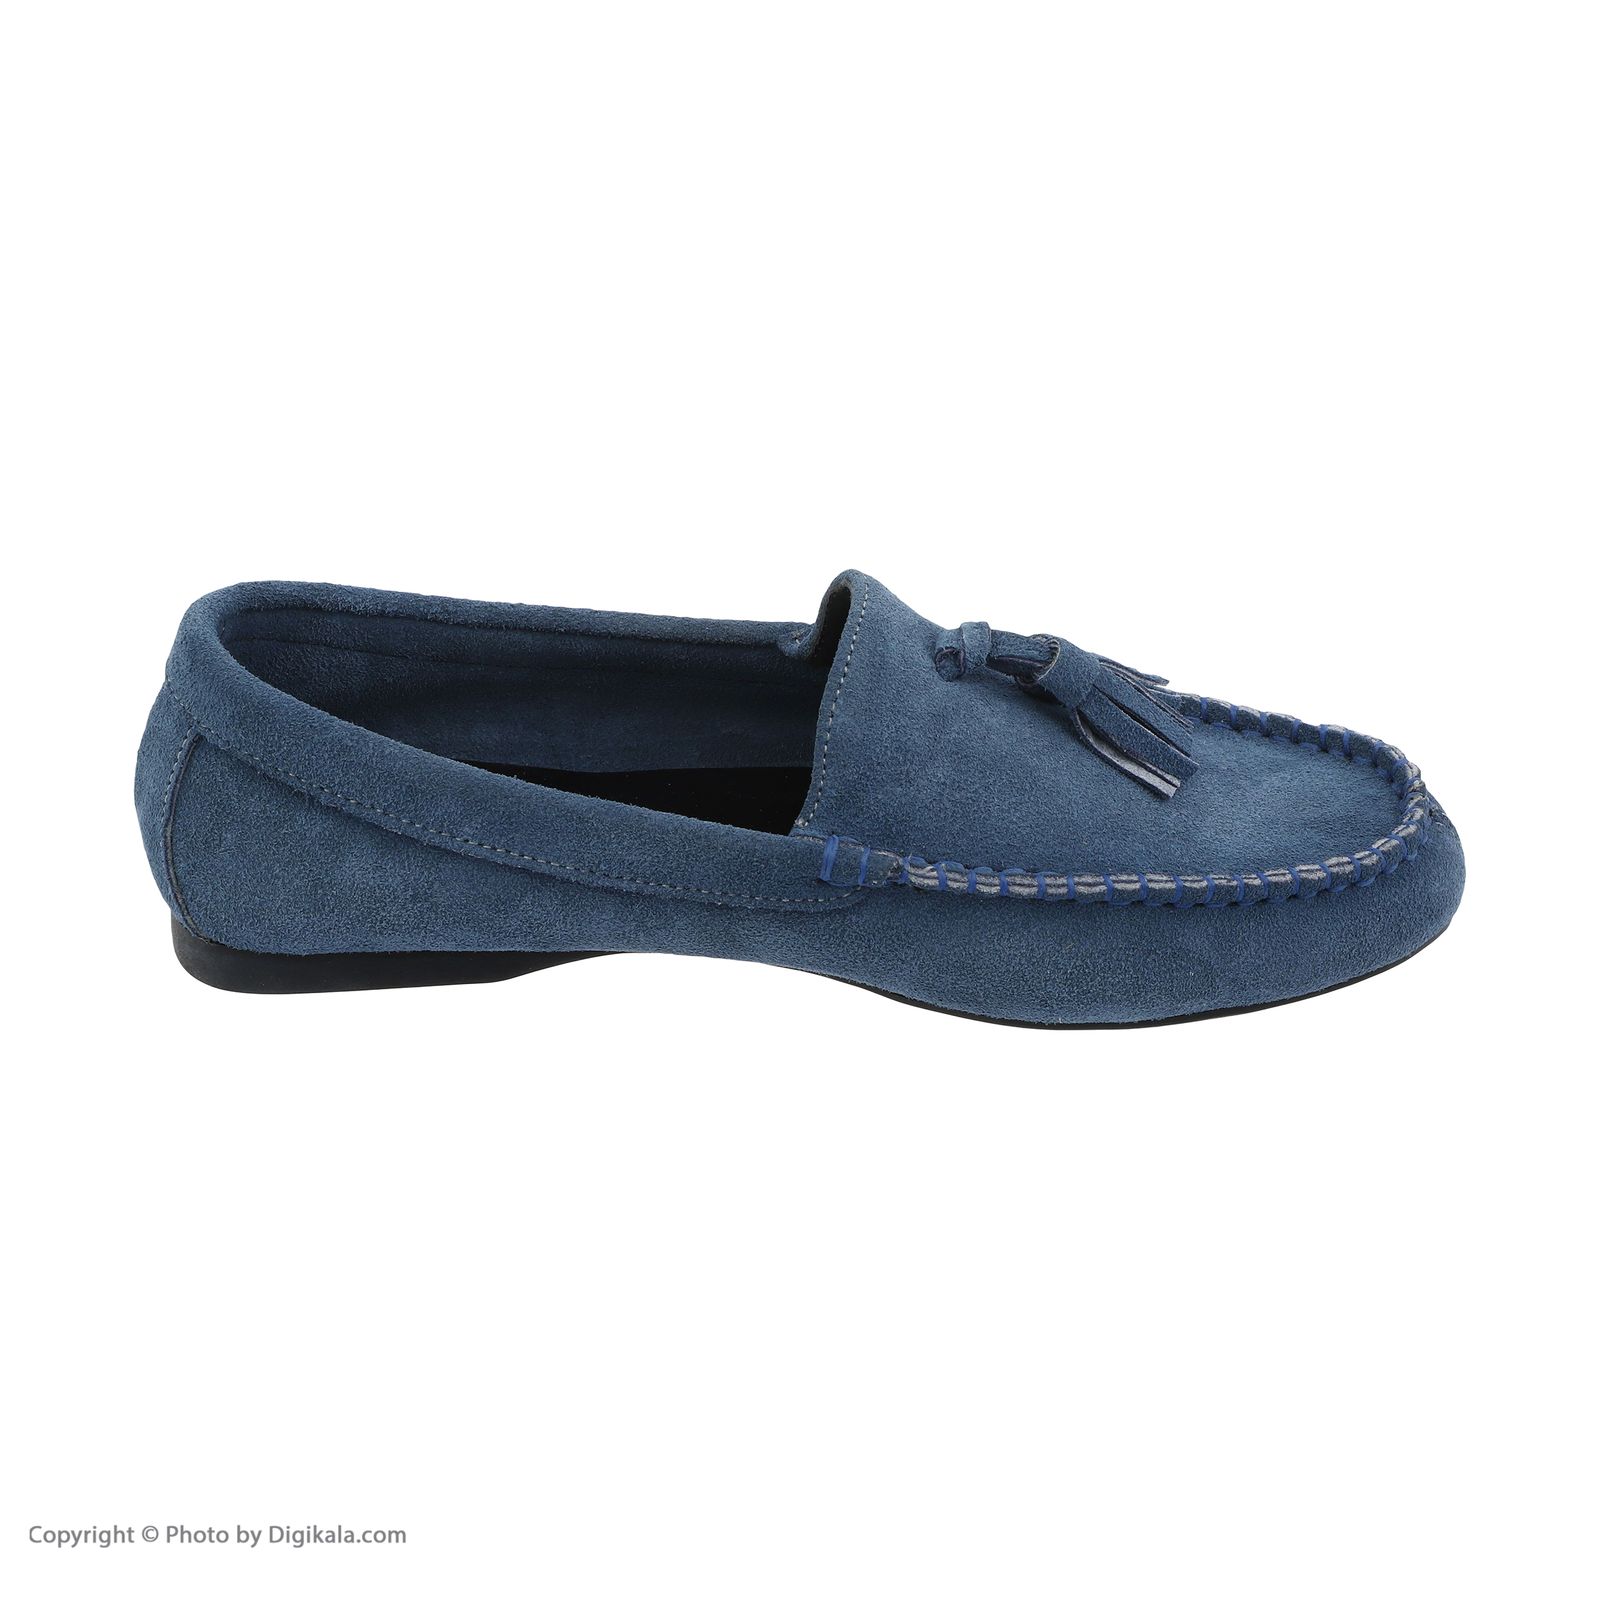  کفش کالج زنانه شوپا مدل skb1000sky blue -  - 6